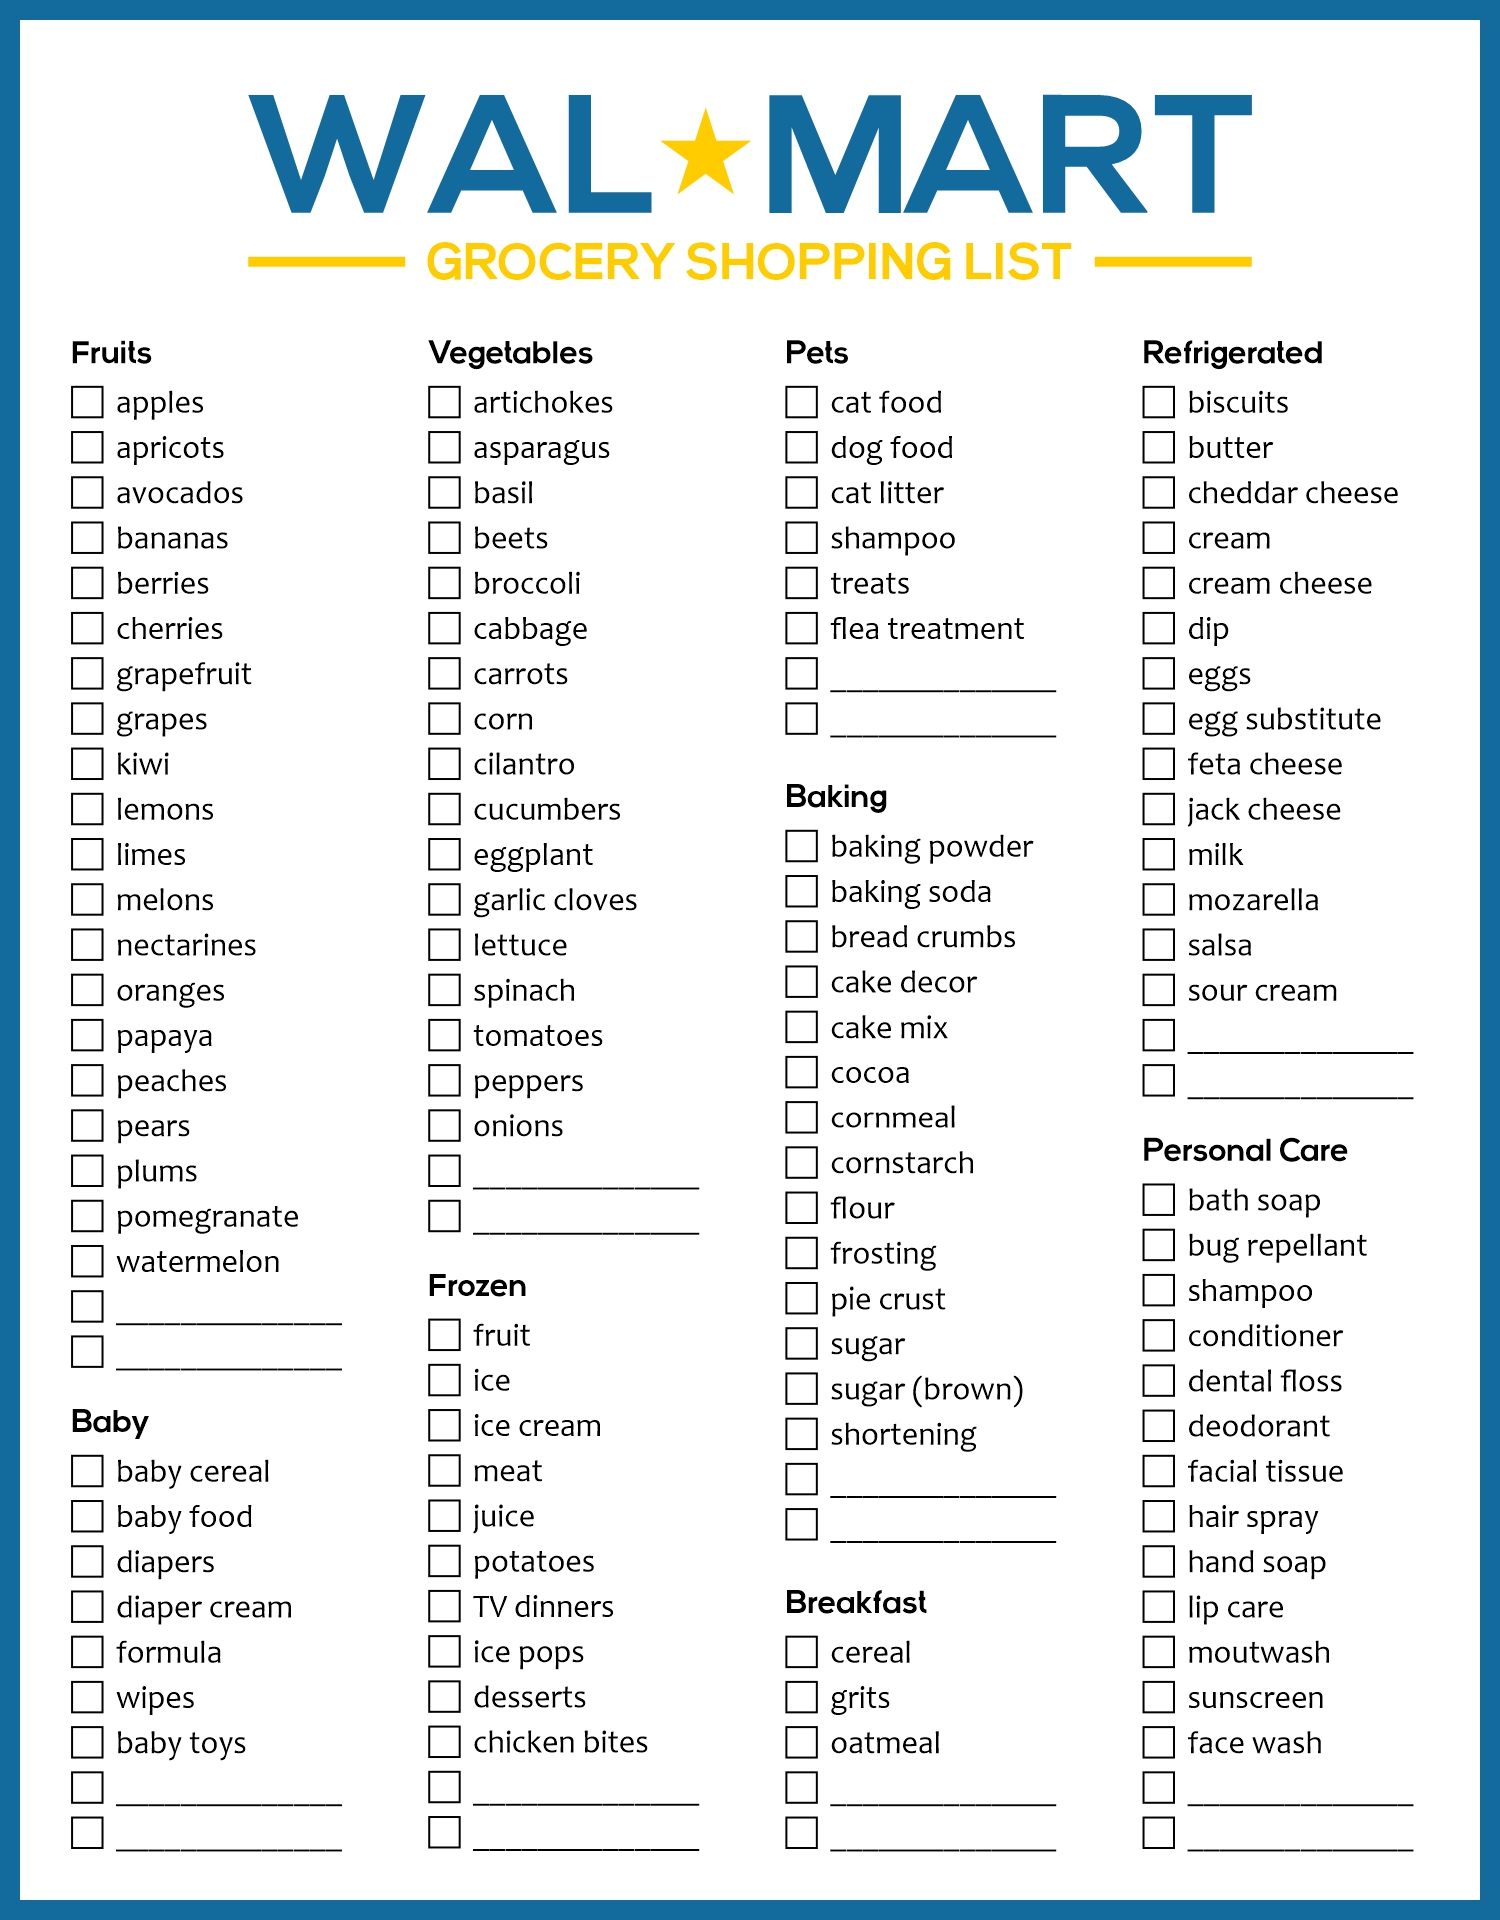 publix-grocery-list-by-aisle-template